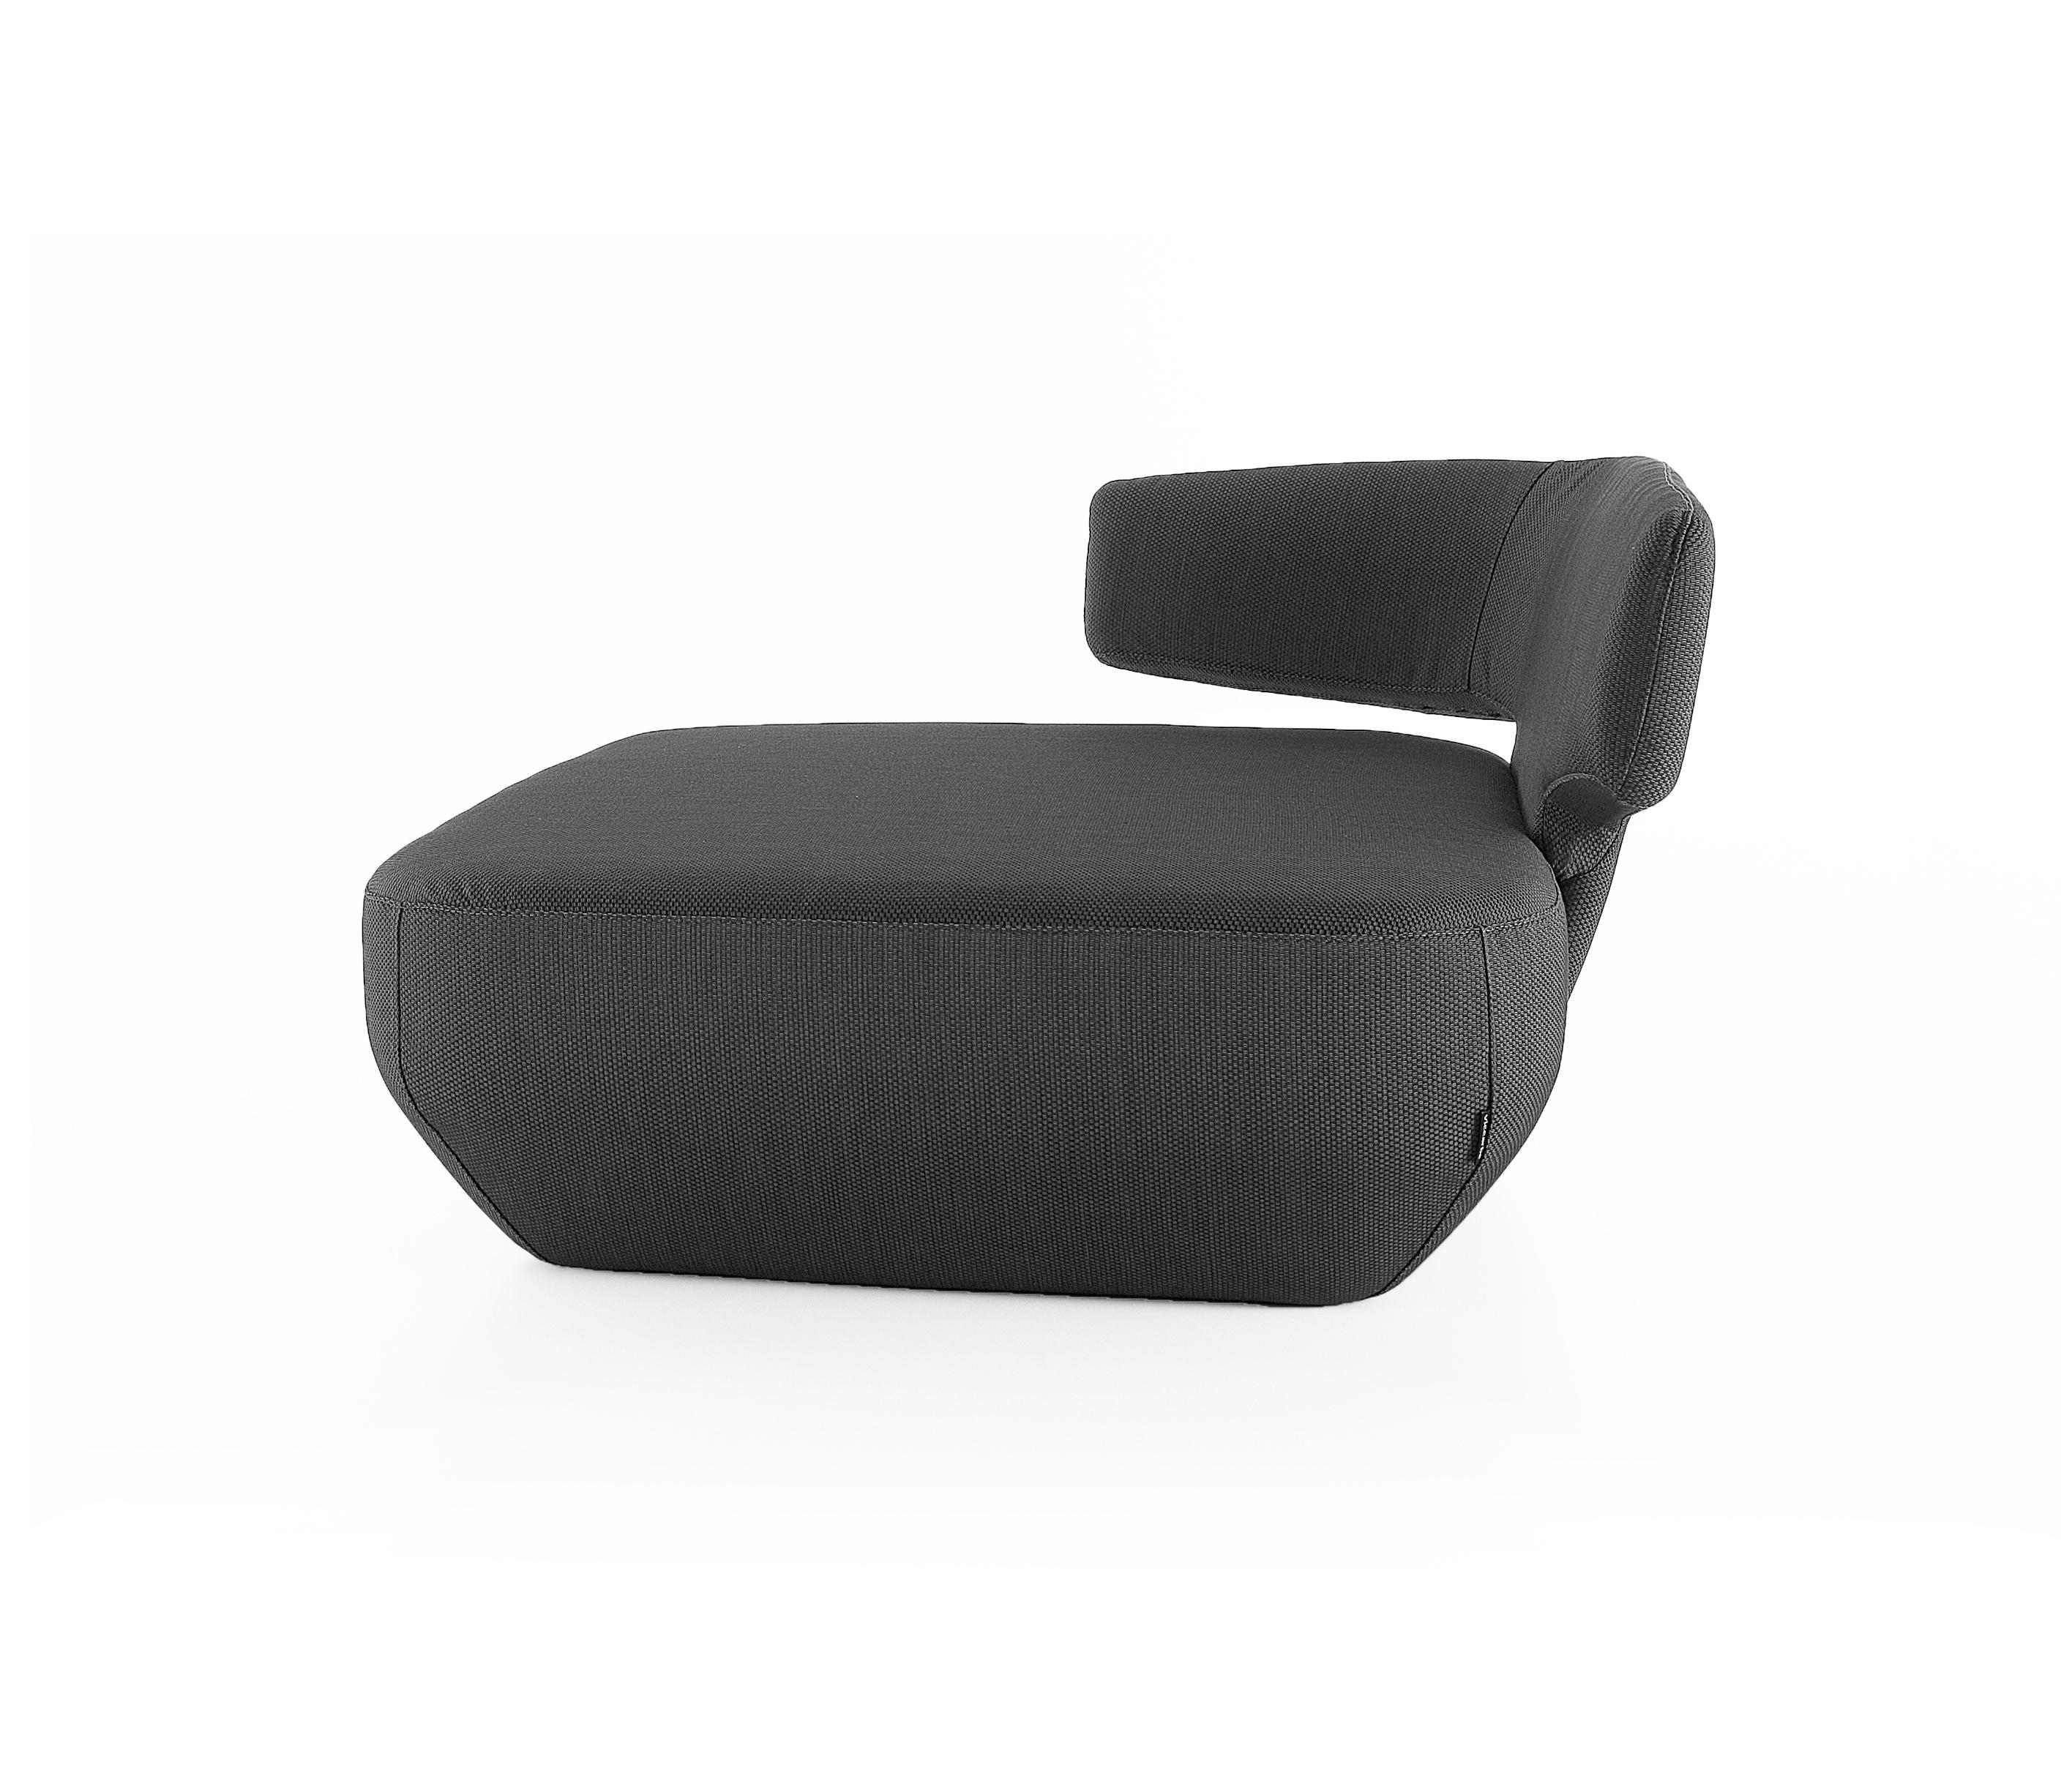 Levitt armchair & designer furniture | Architonic